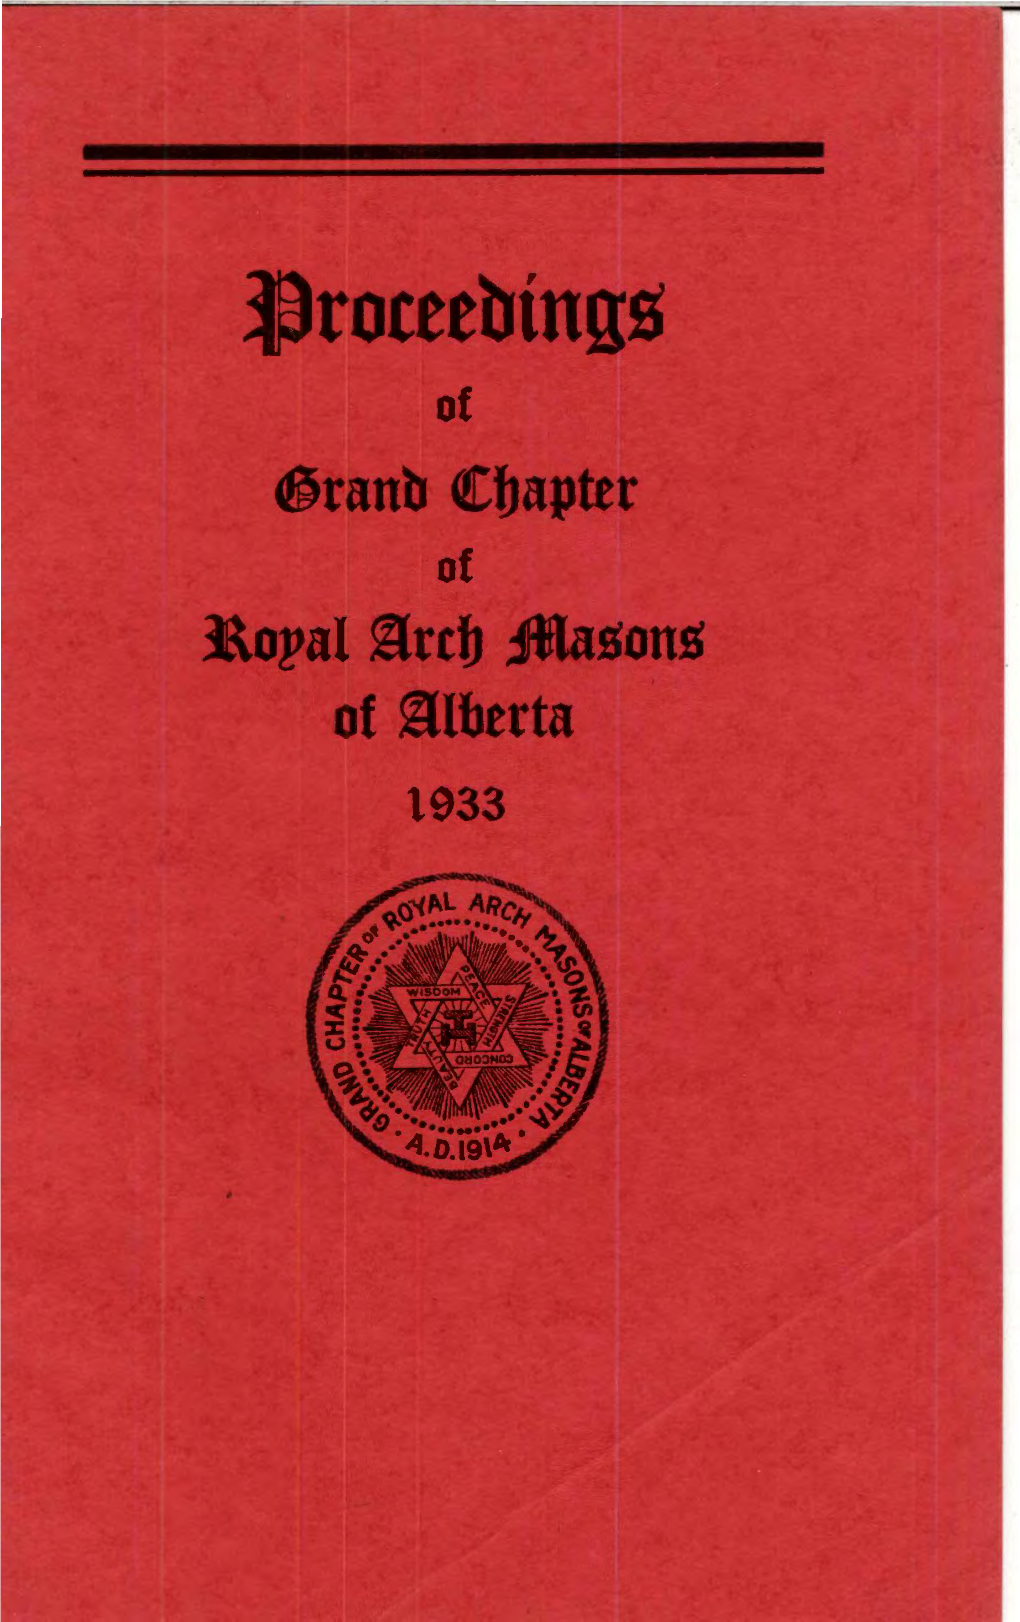 Grand Chapter of Alberta Proceedings 1933